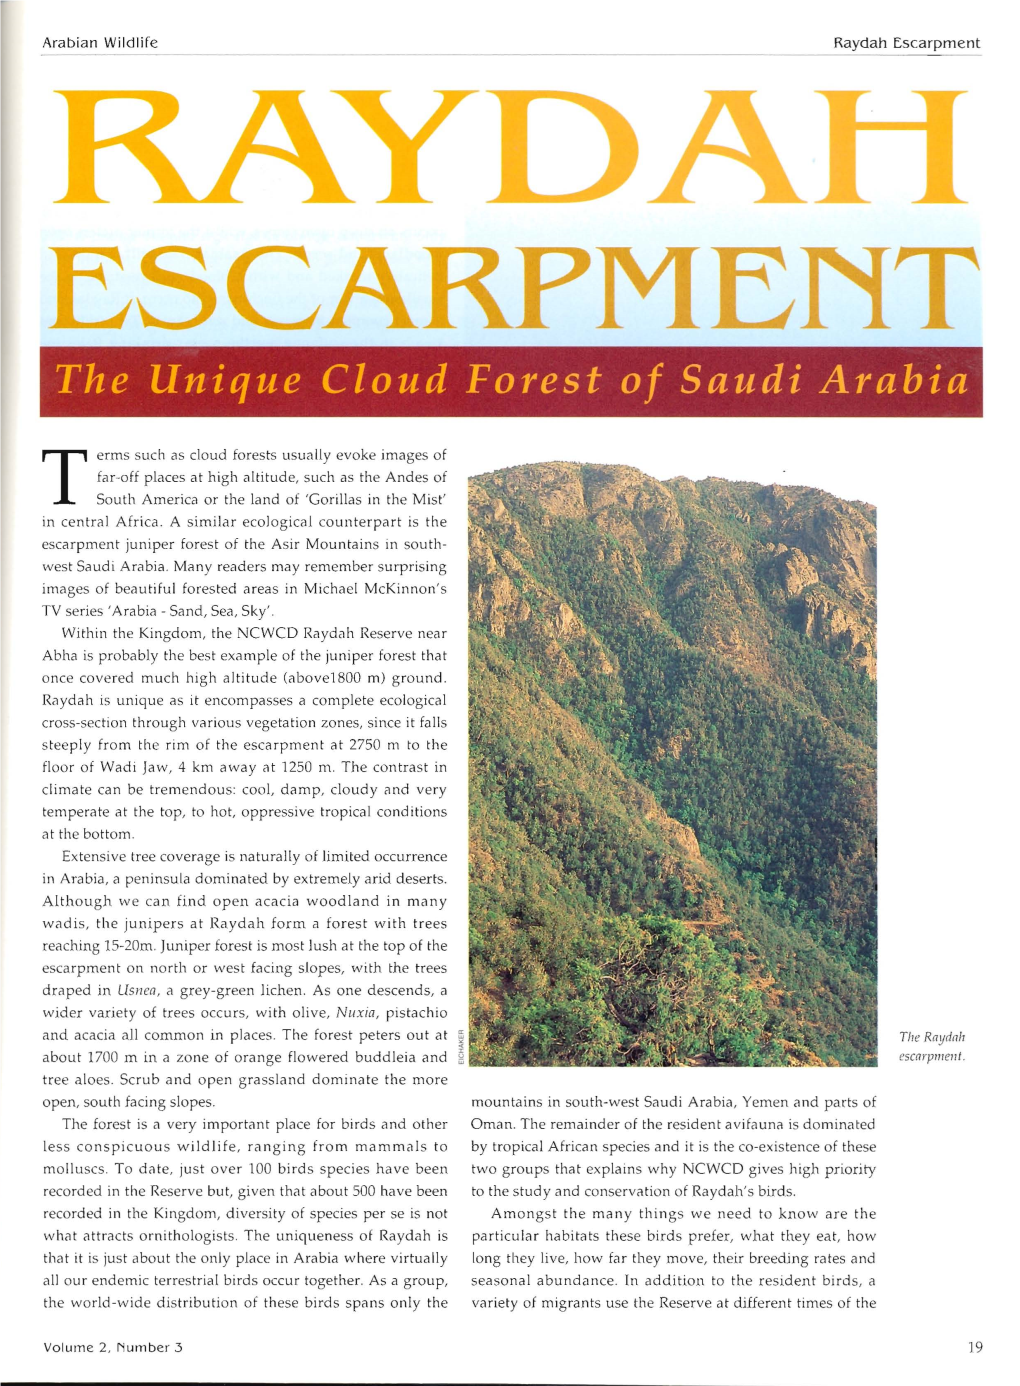 Raydah Escarpment. the Unique Cloud Forest of Saudi Arabia